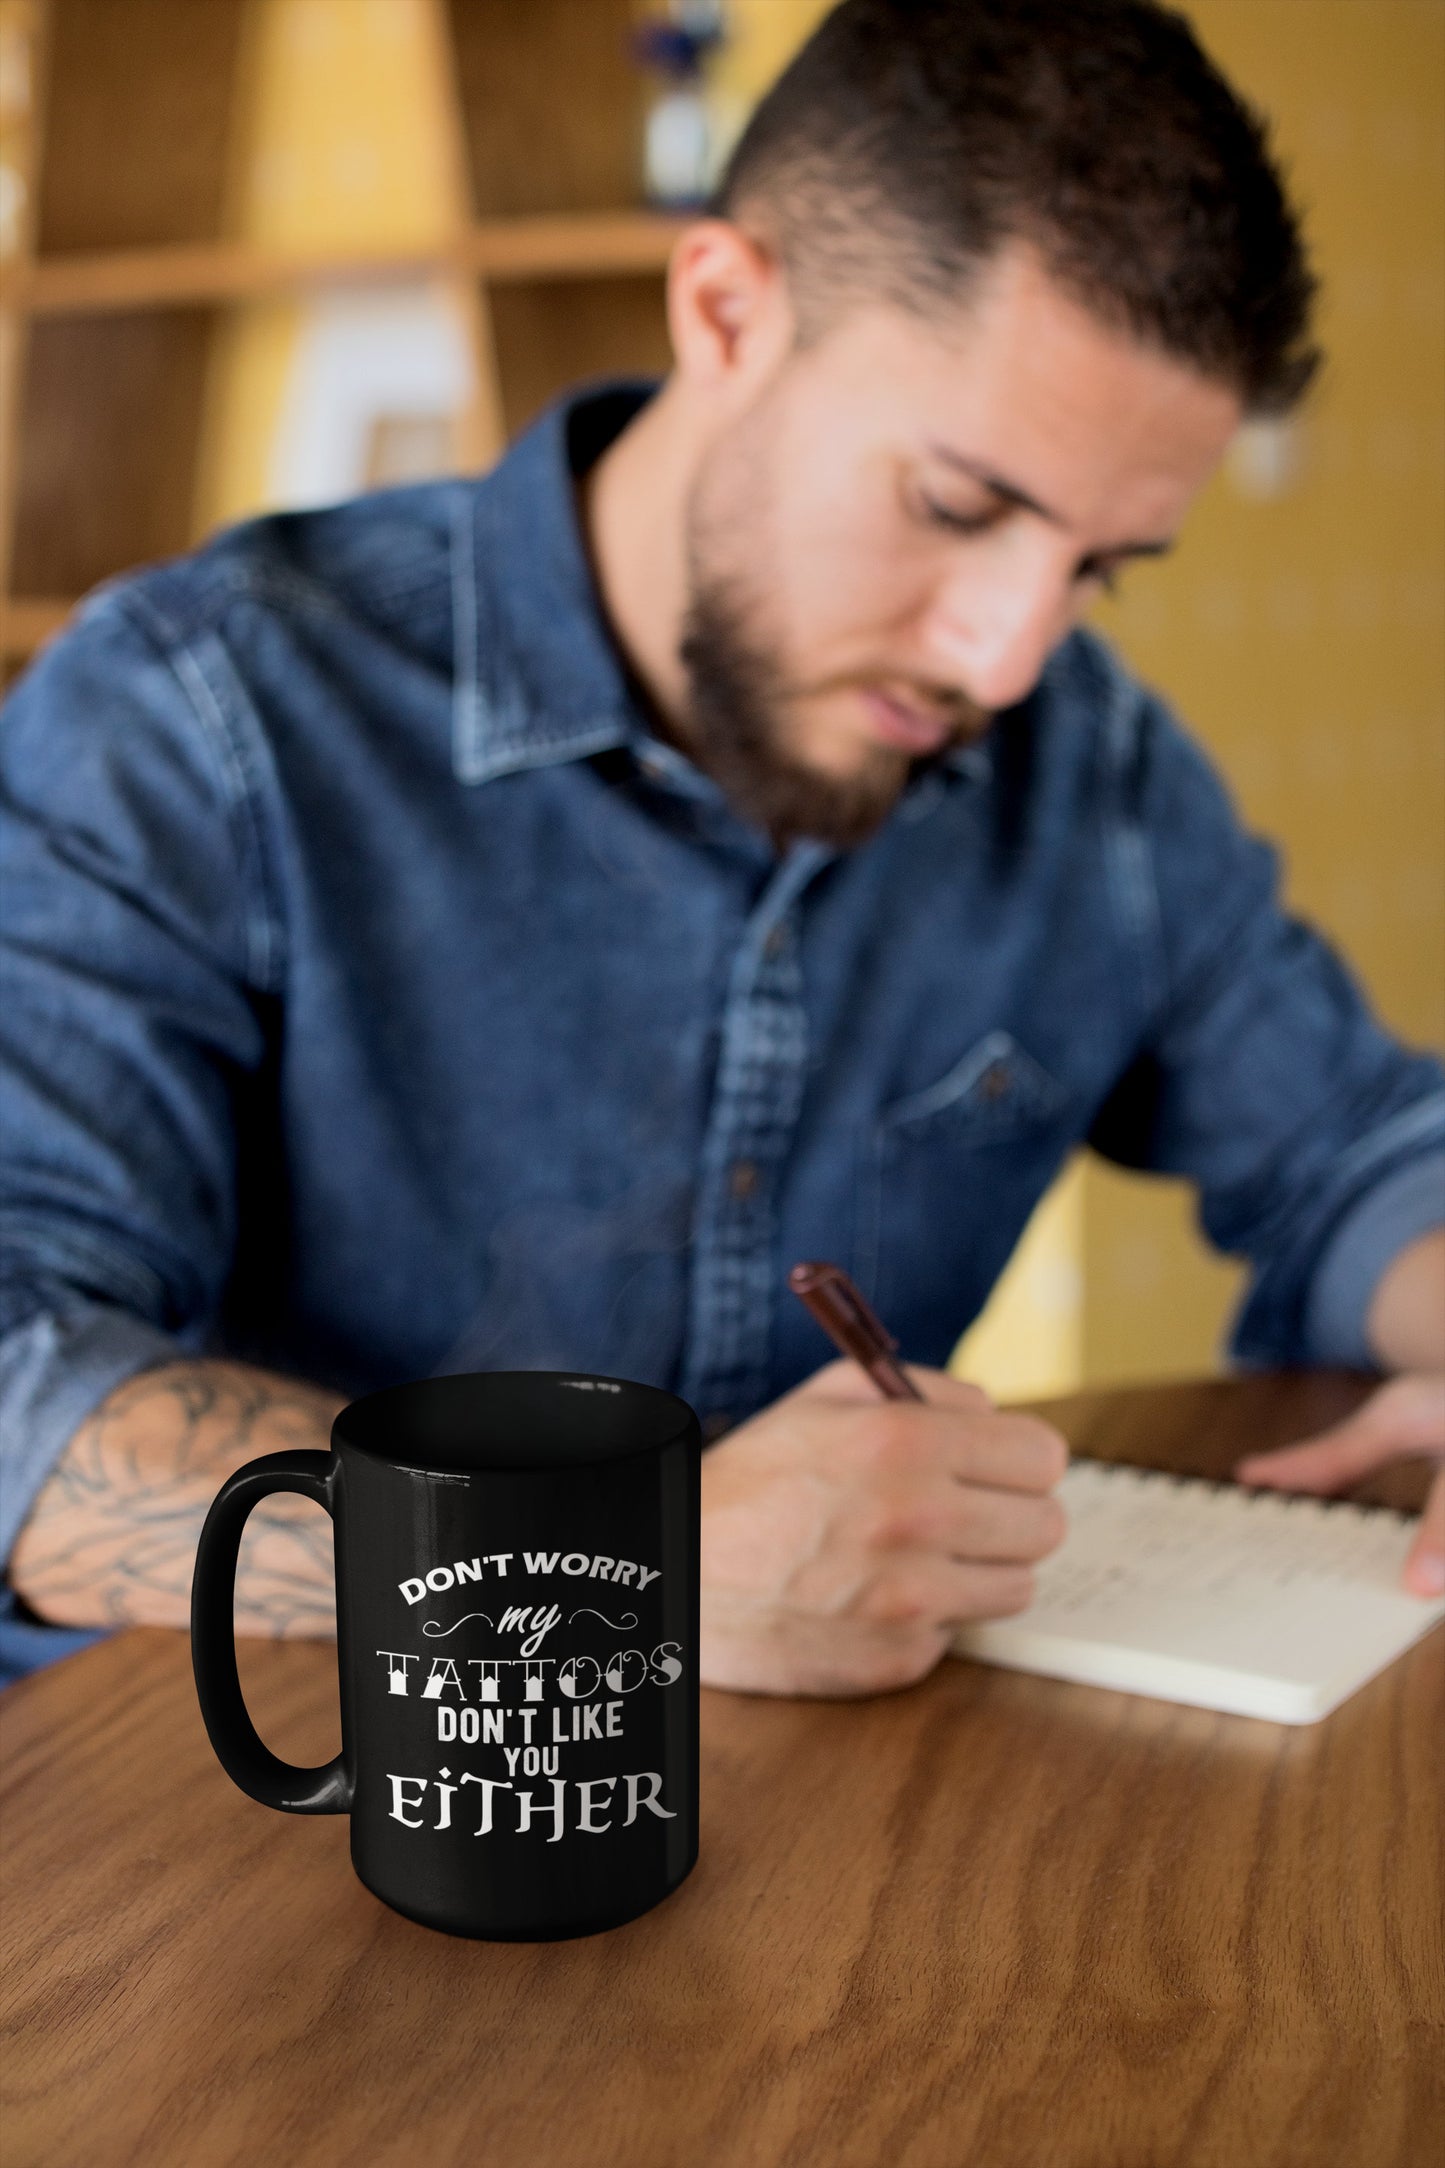 Coffee Mug -Don't Worry My Tattoos Don't Like you Either, Sublimated 11 oz  Coffee Mug  Black